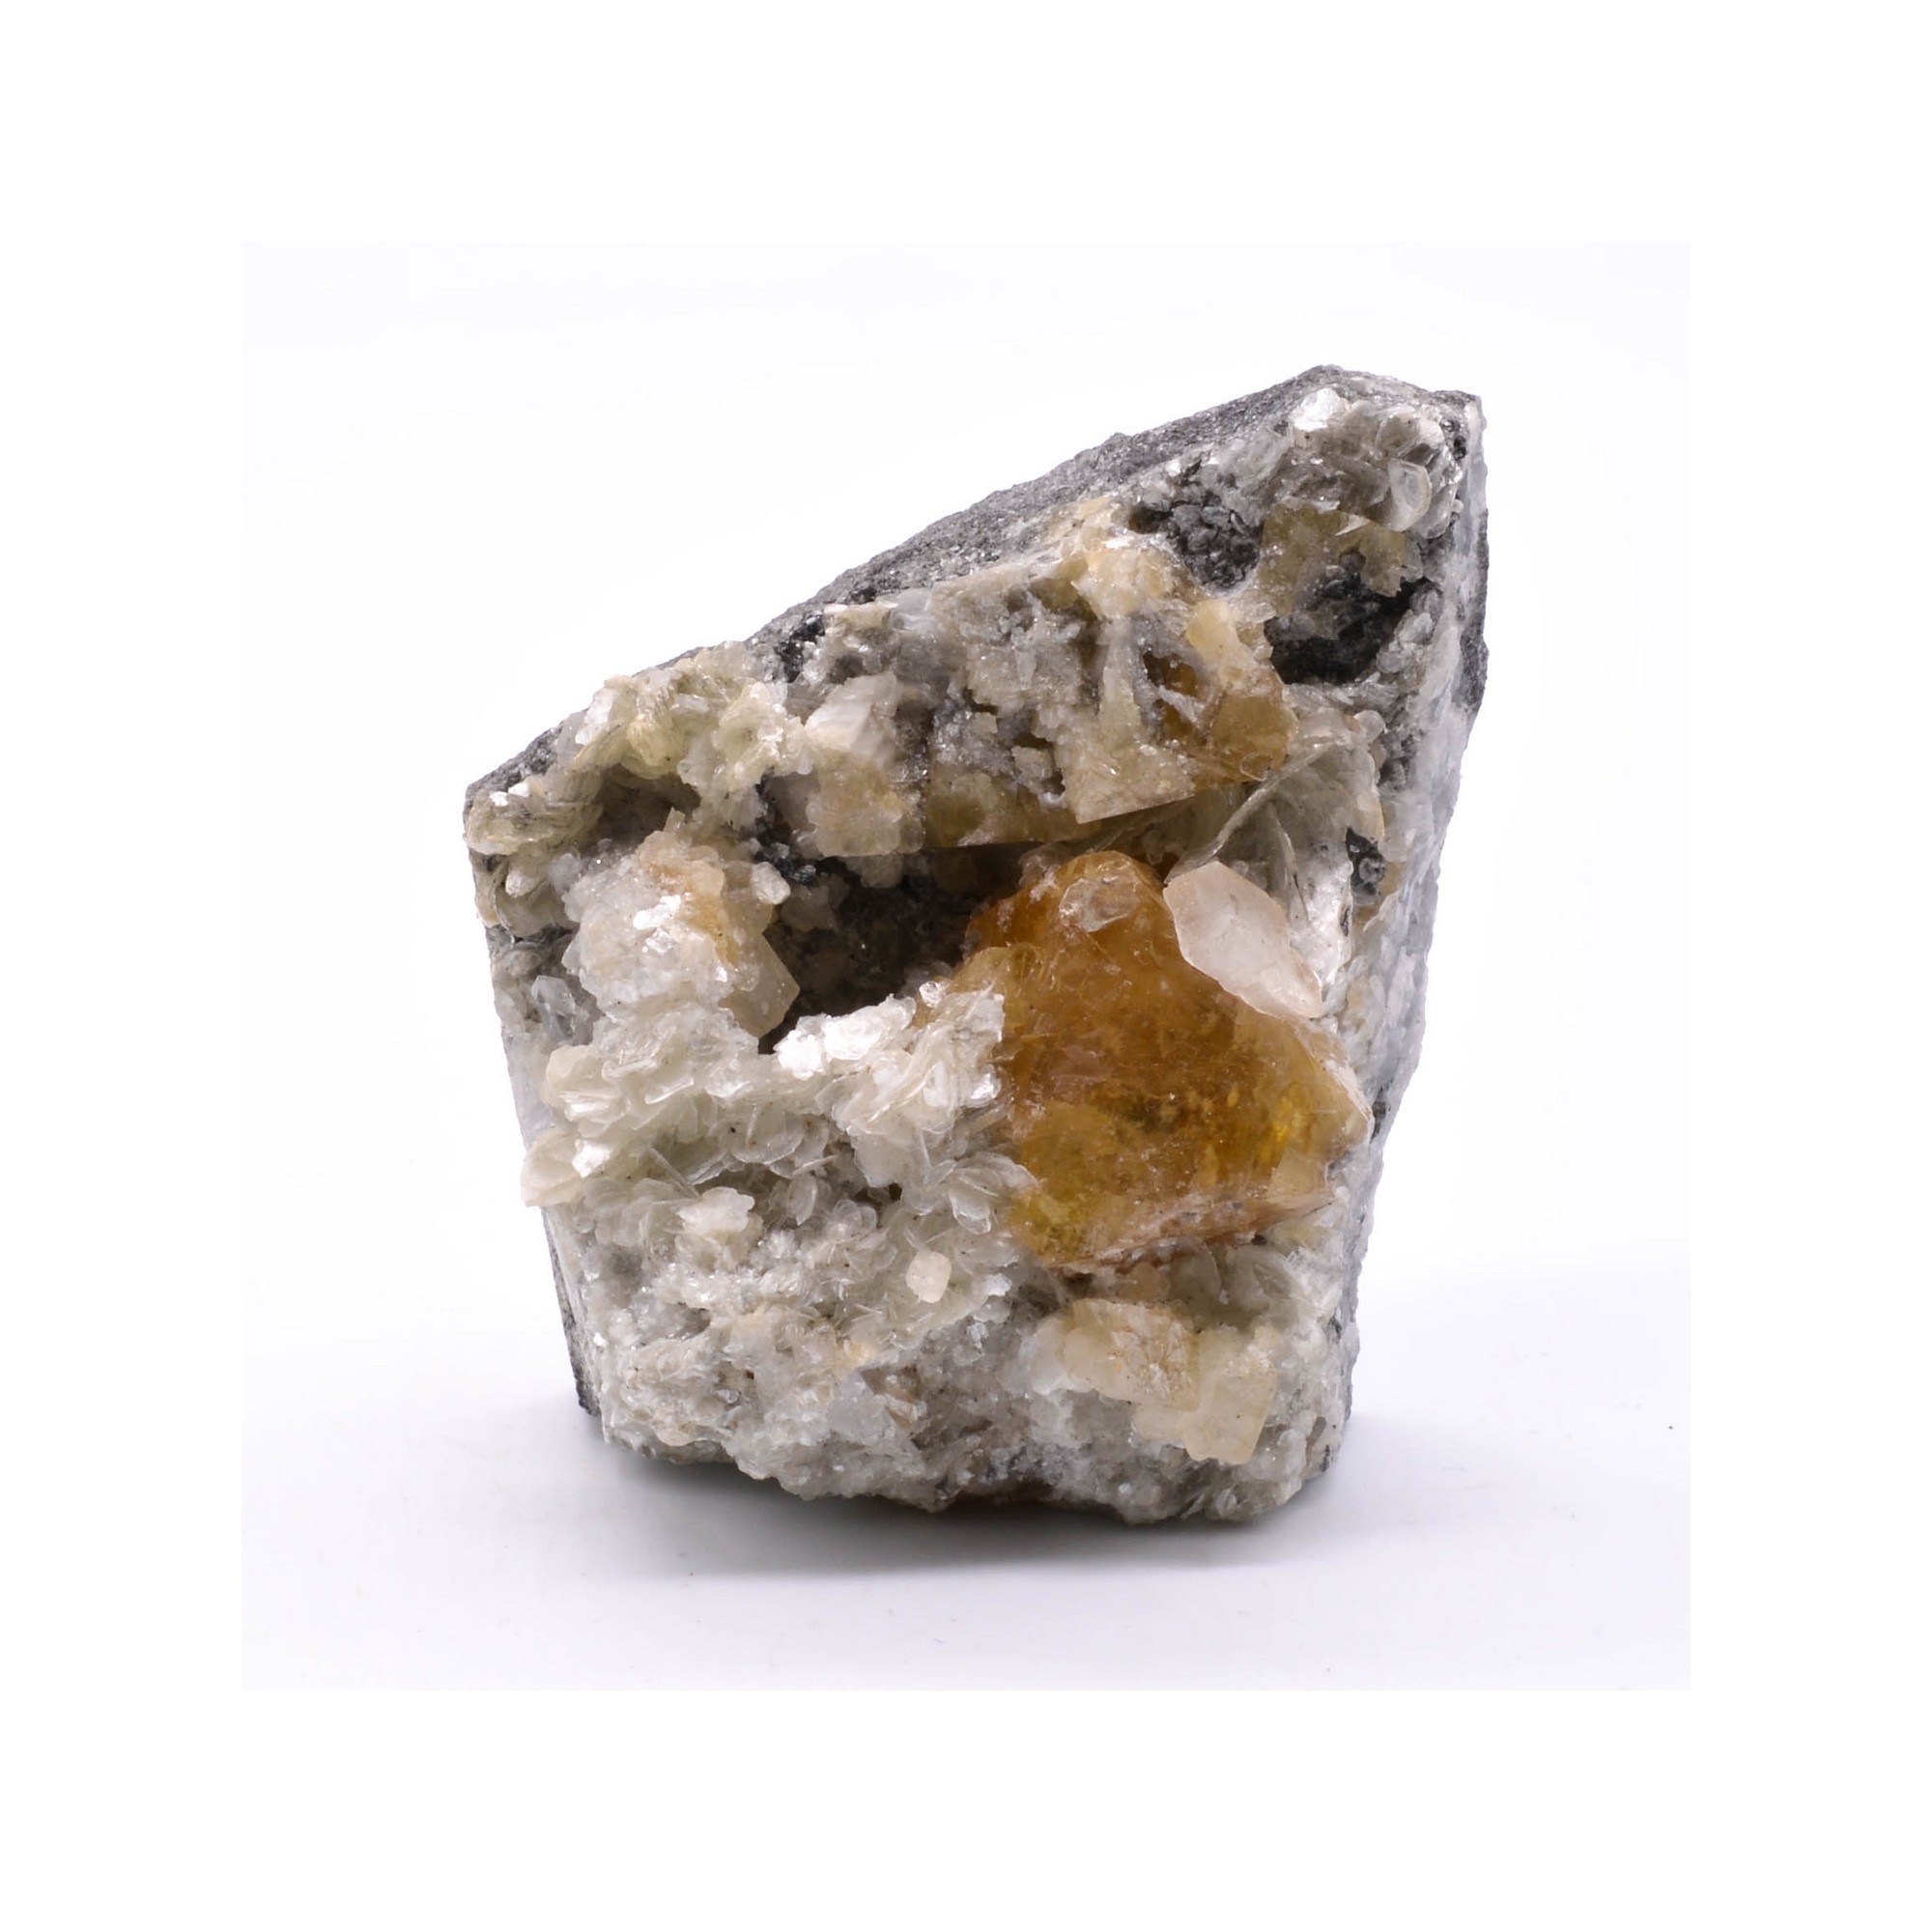 Scheelite and calcite on muscovite - Xuebaoding Mts, Pingwu, Sichuan Prov., China